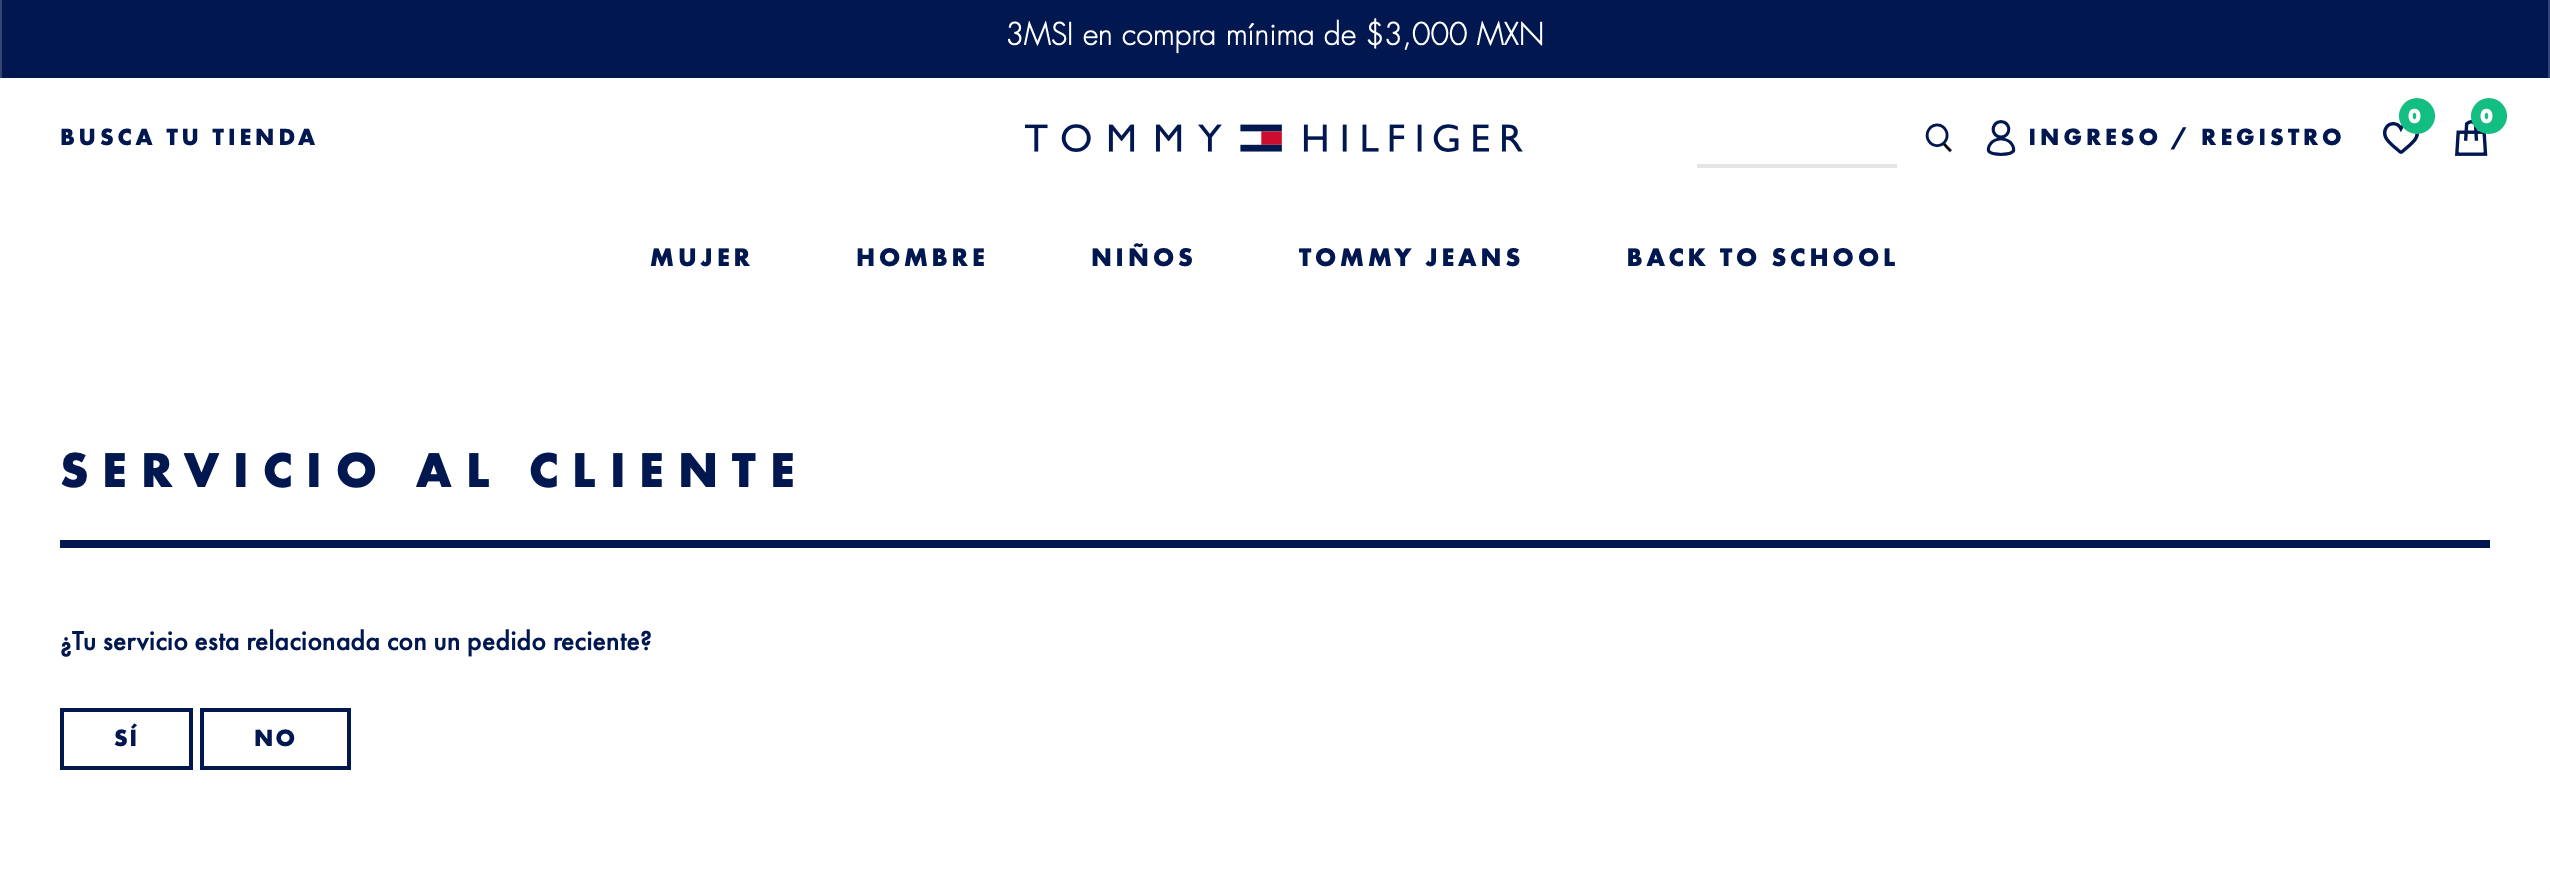 Ejemplo de página de contacto: Tommy Hilfiger